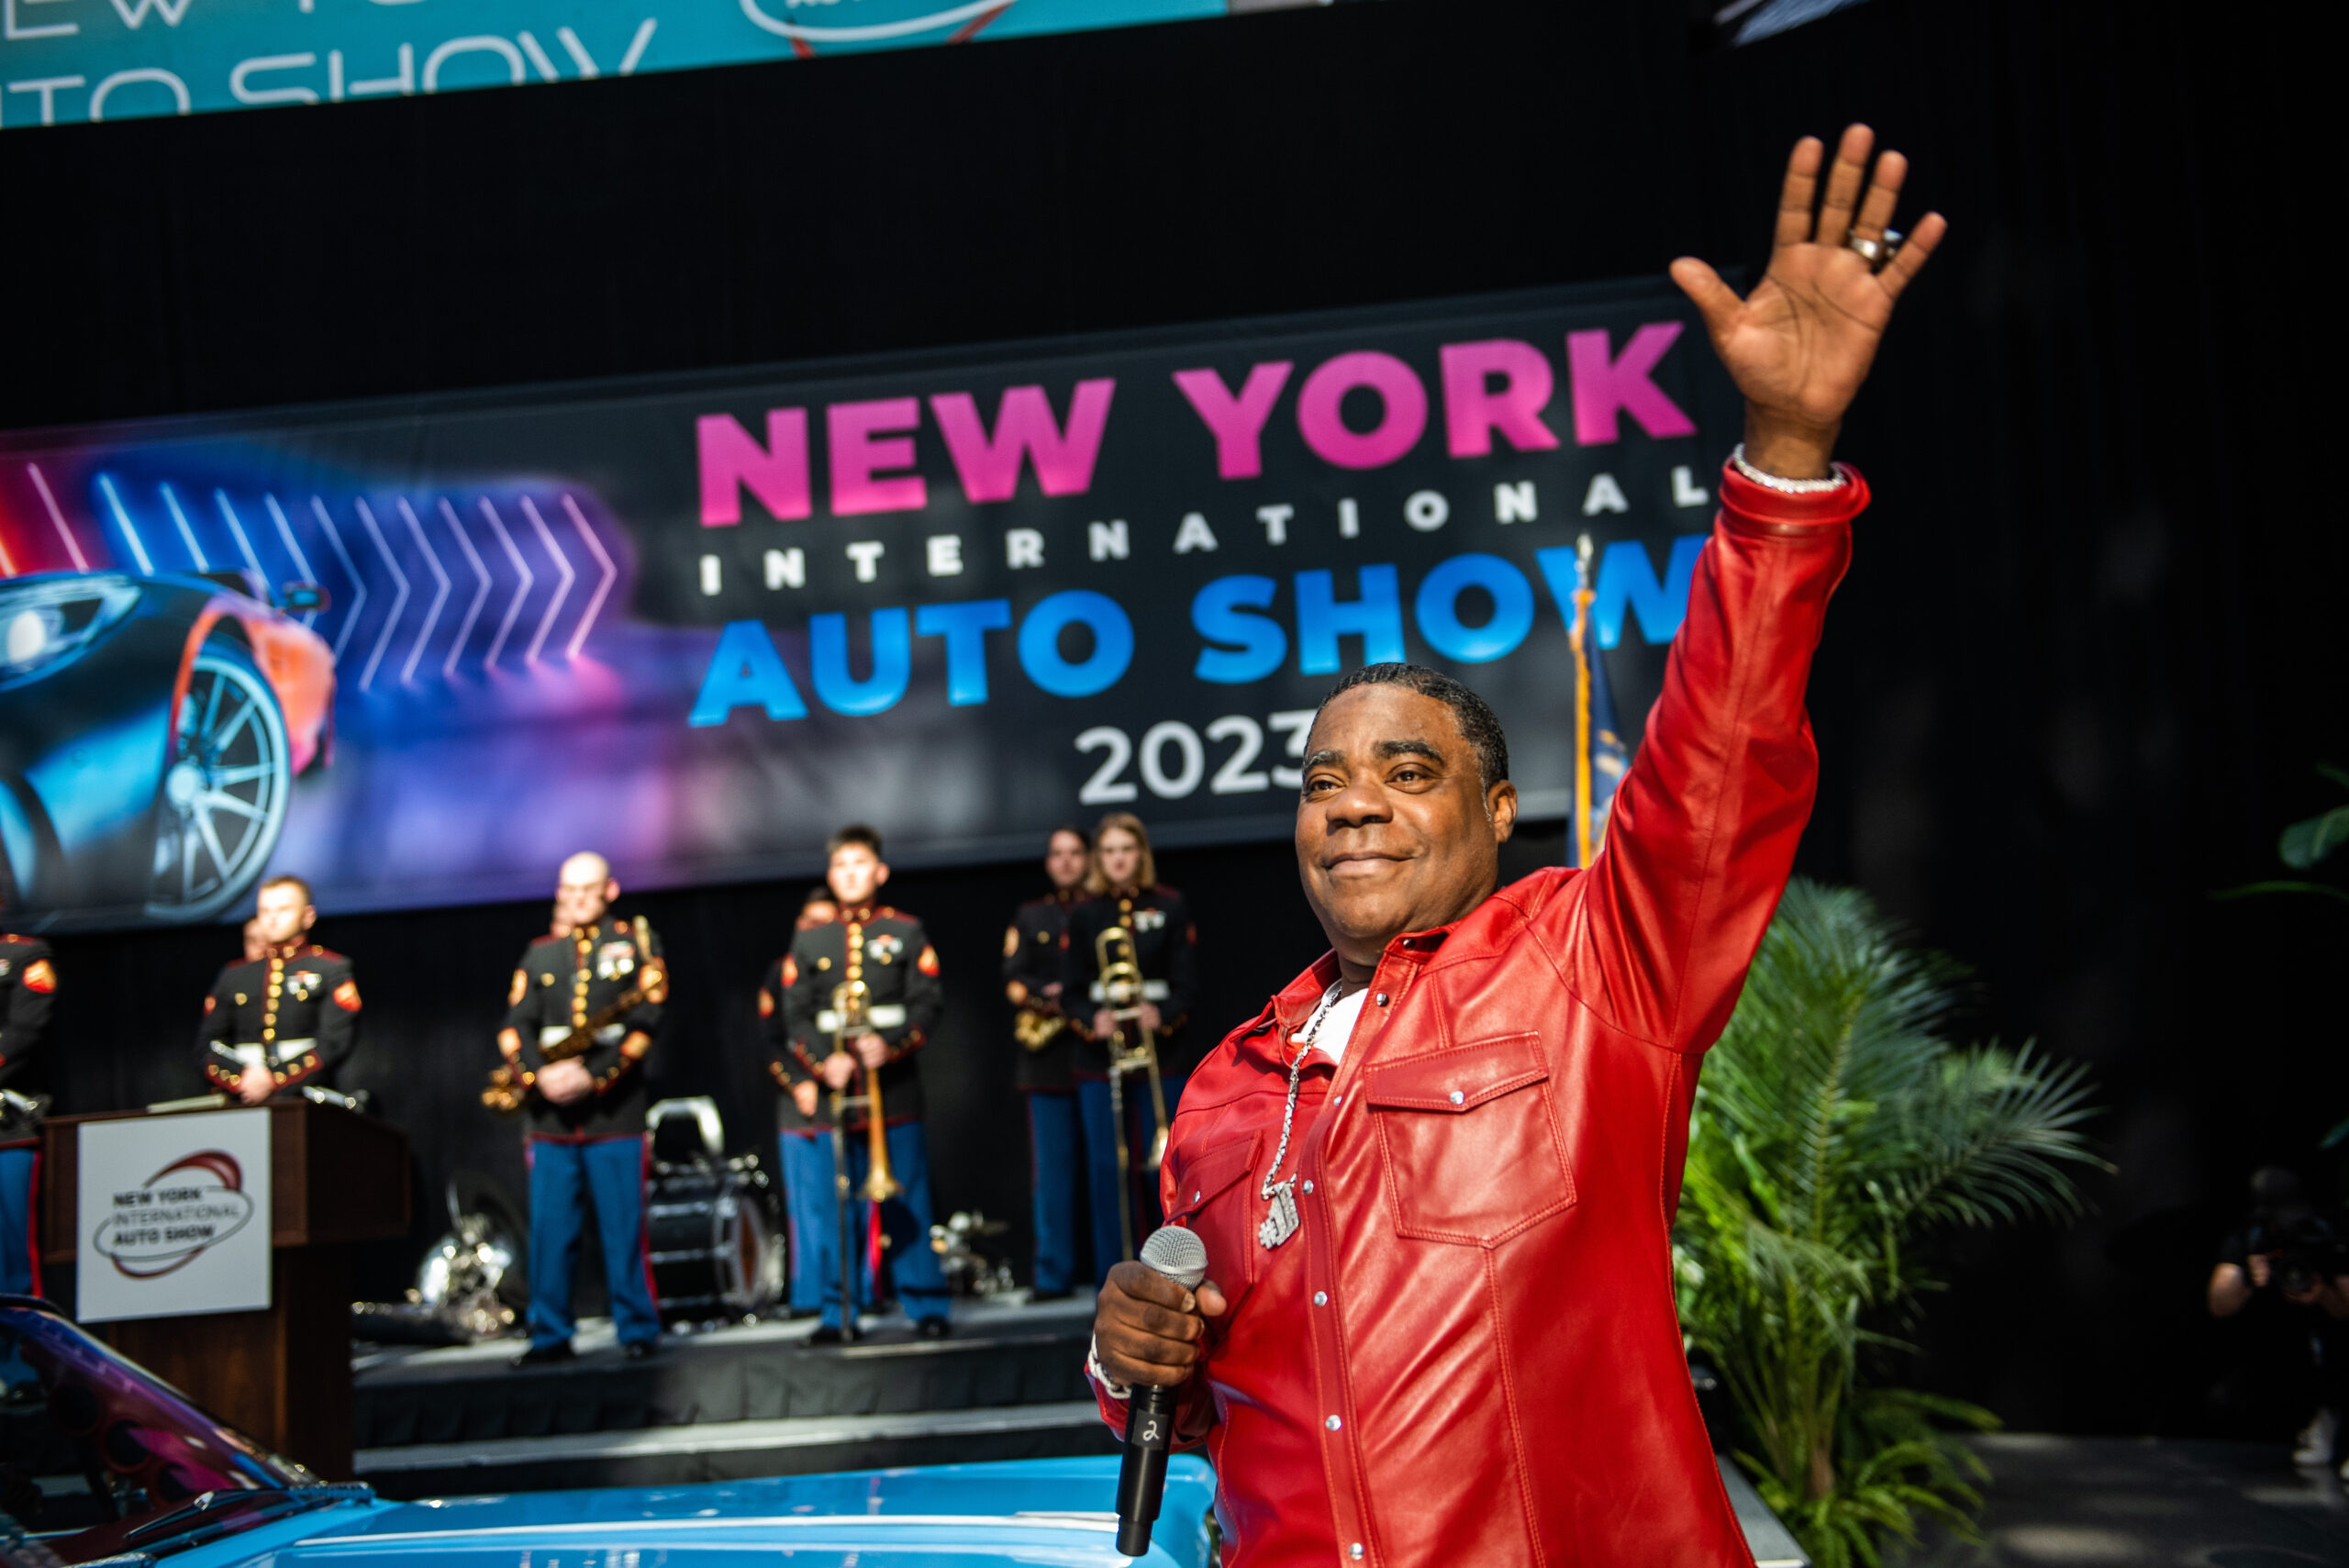 New York International Auto Show 2022 - BEST NEW Vehicles! 